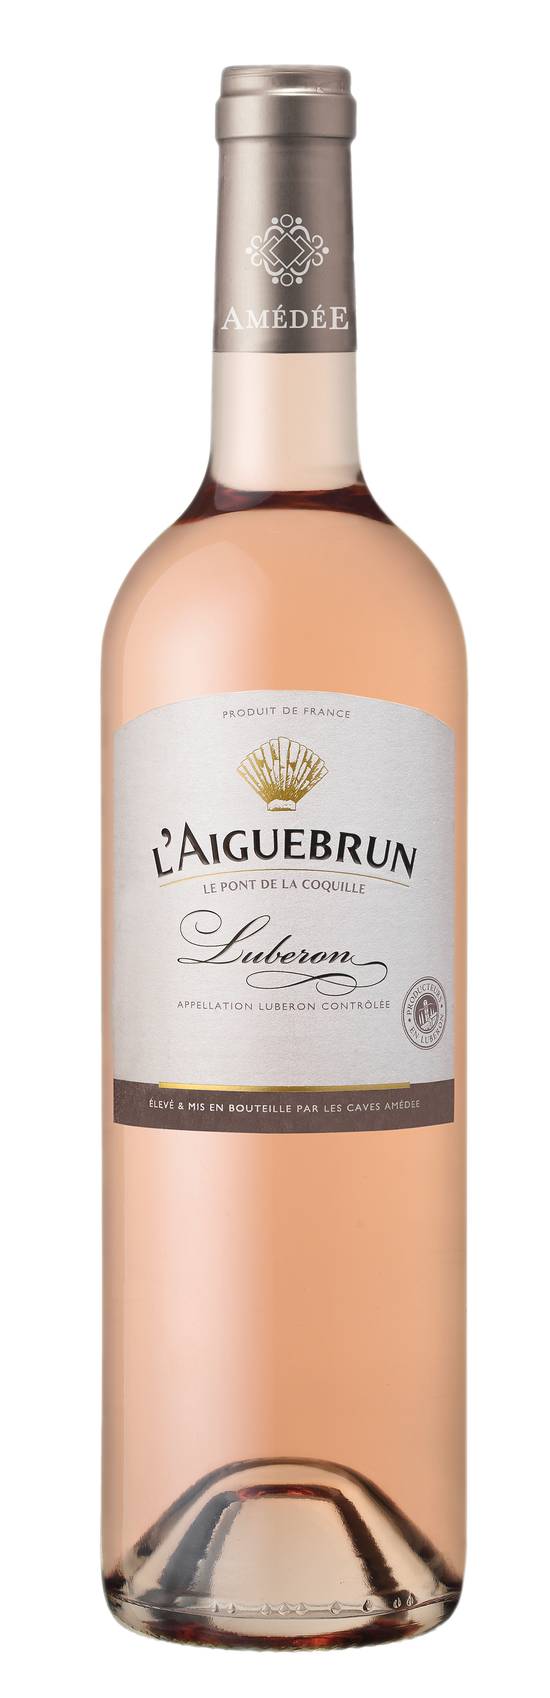 Aiguebrun - Vin rosé lubéron (750 ml)